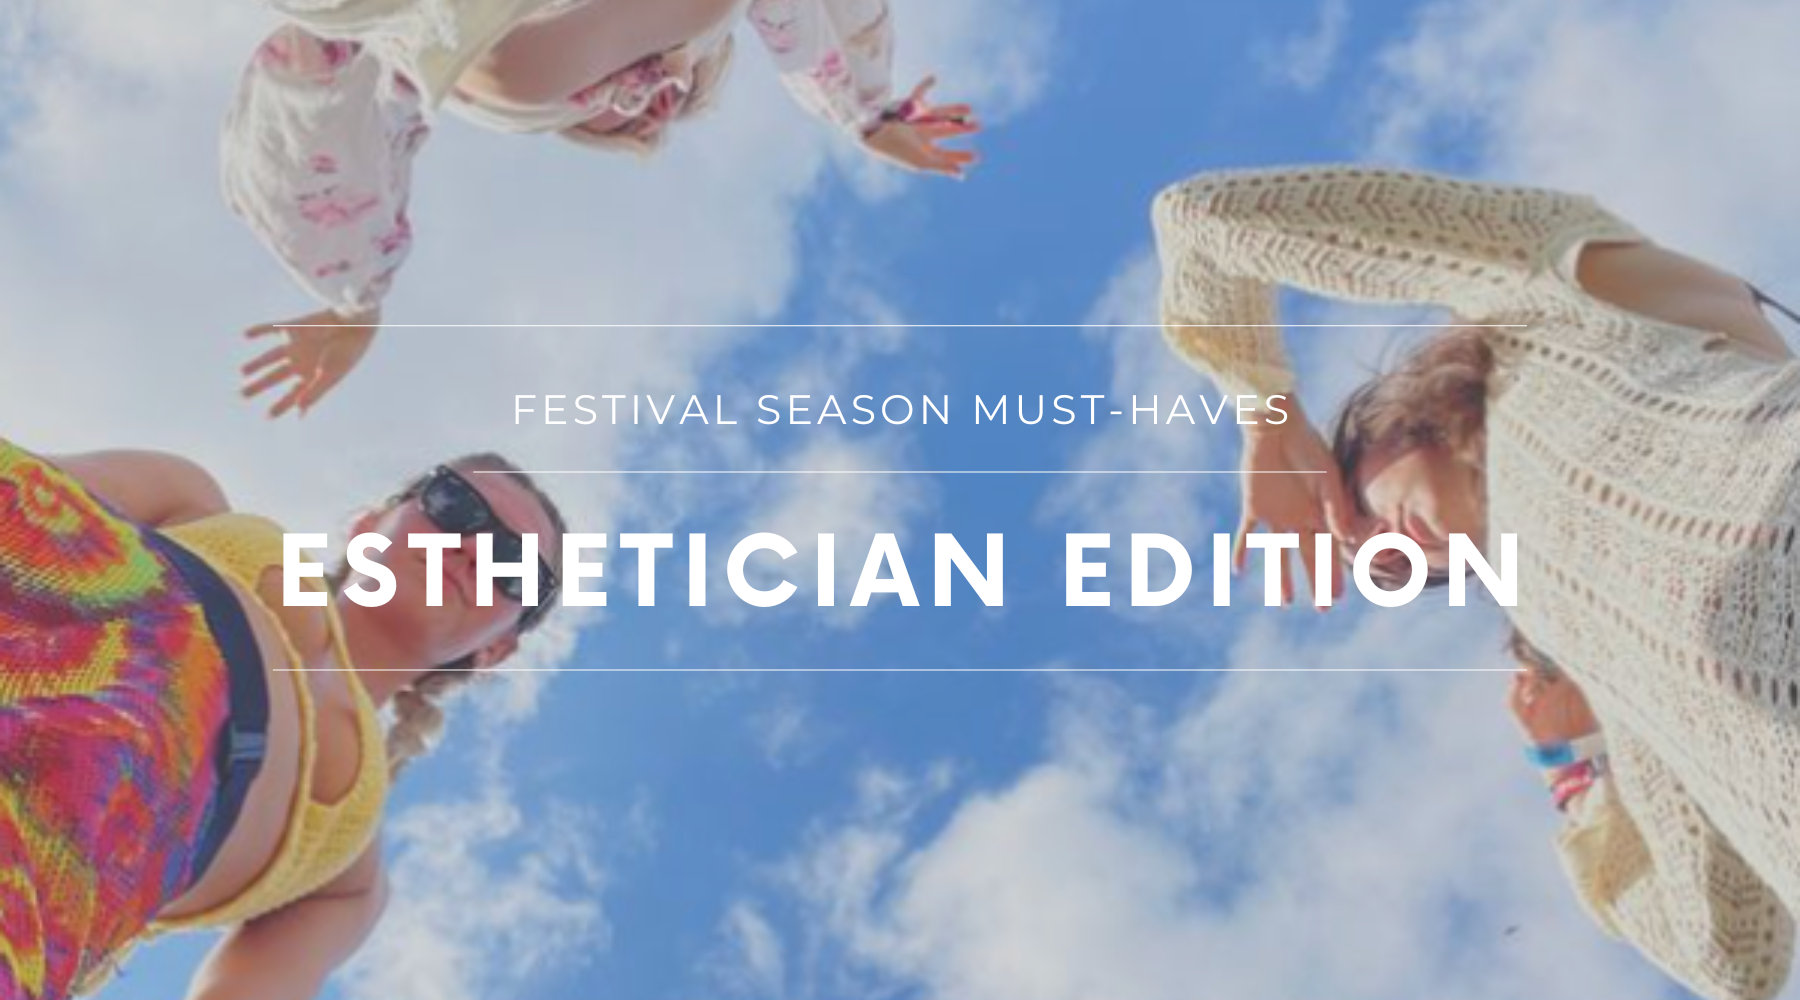 Festival Season Must-Haves - Esthetician Edition